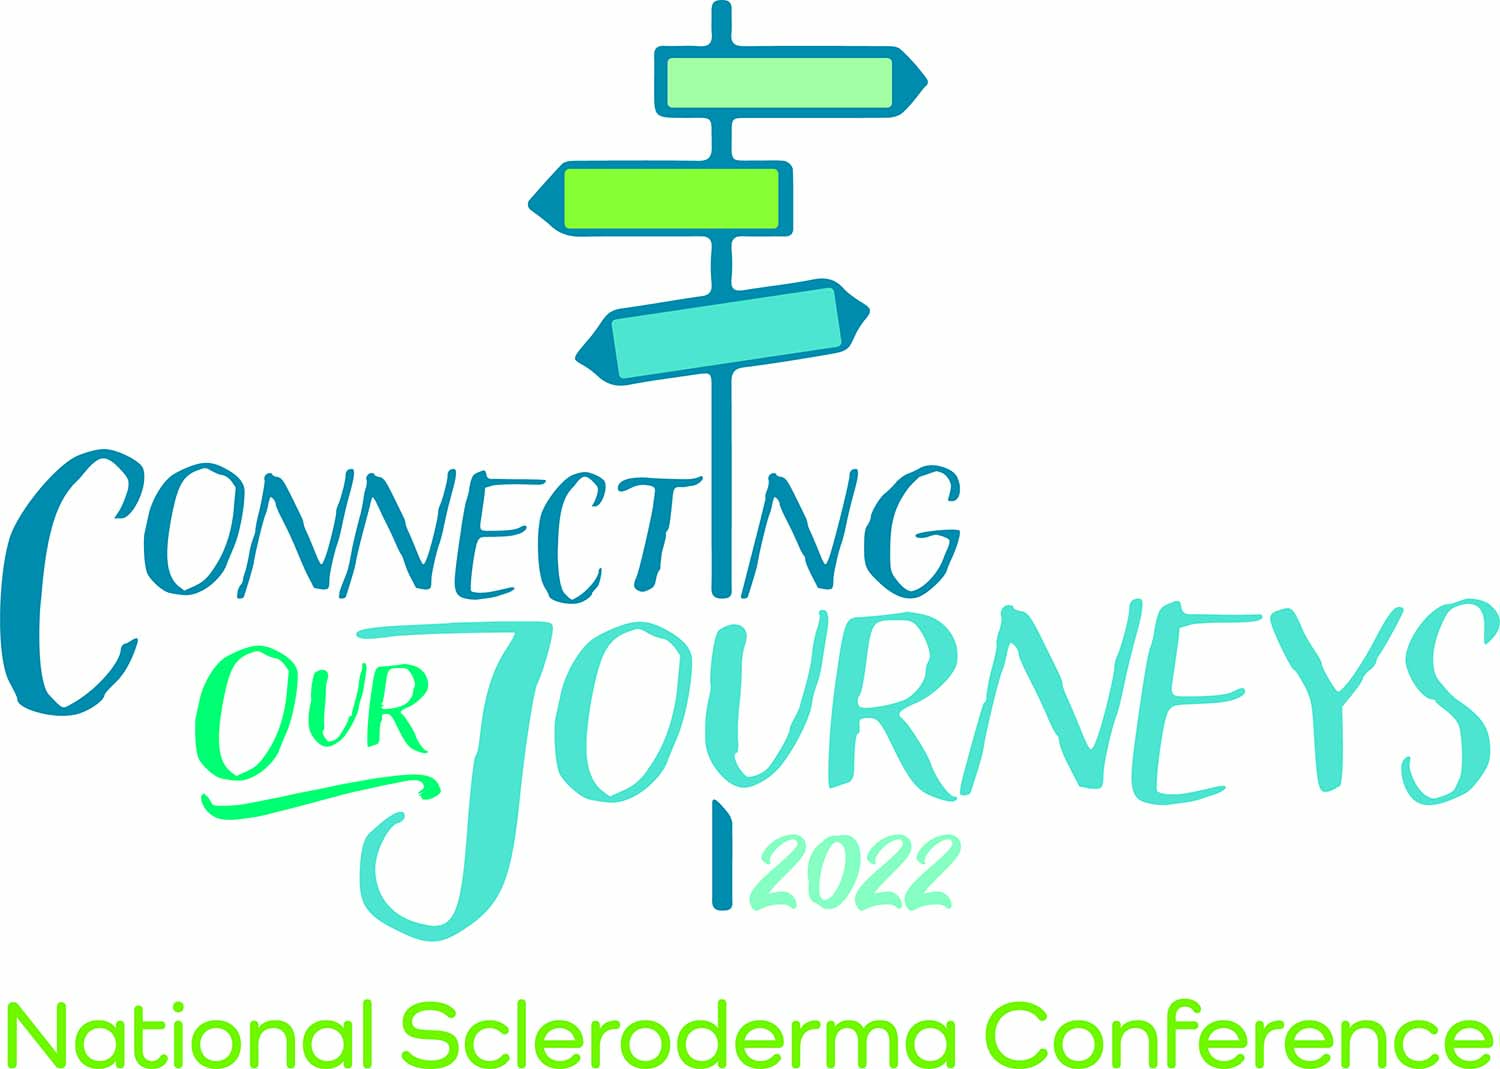 National Scleroderma Conference 2022.jpg